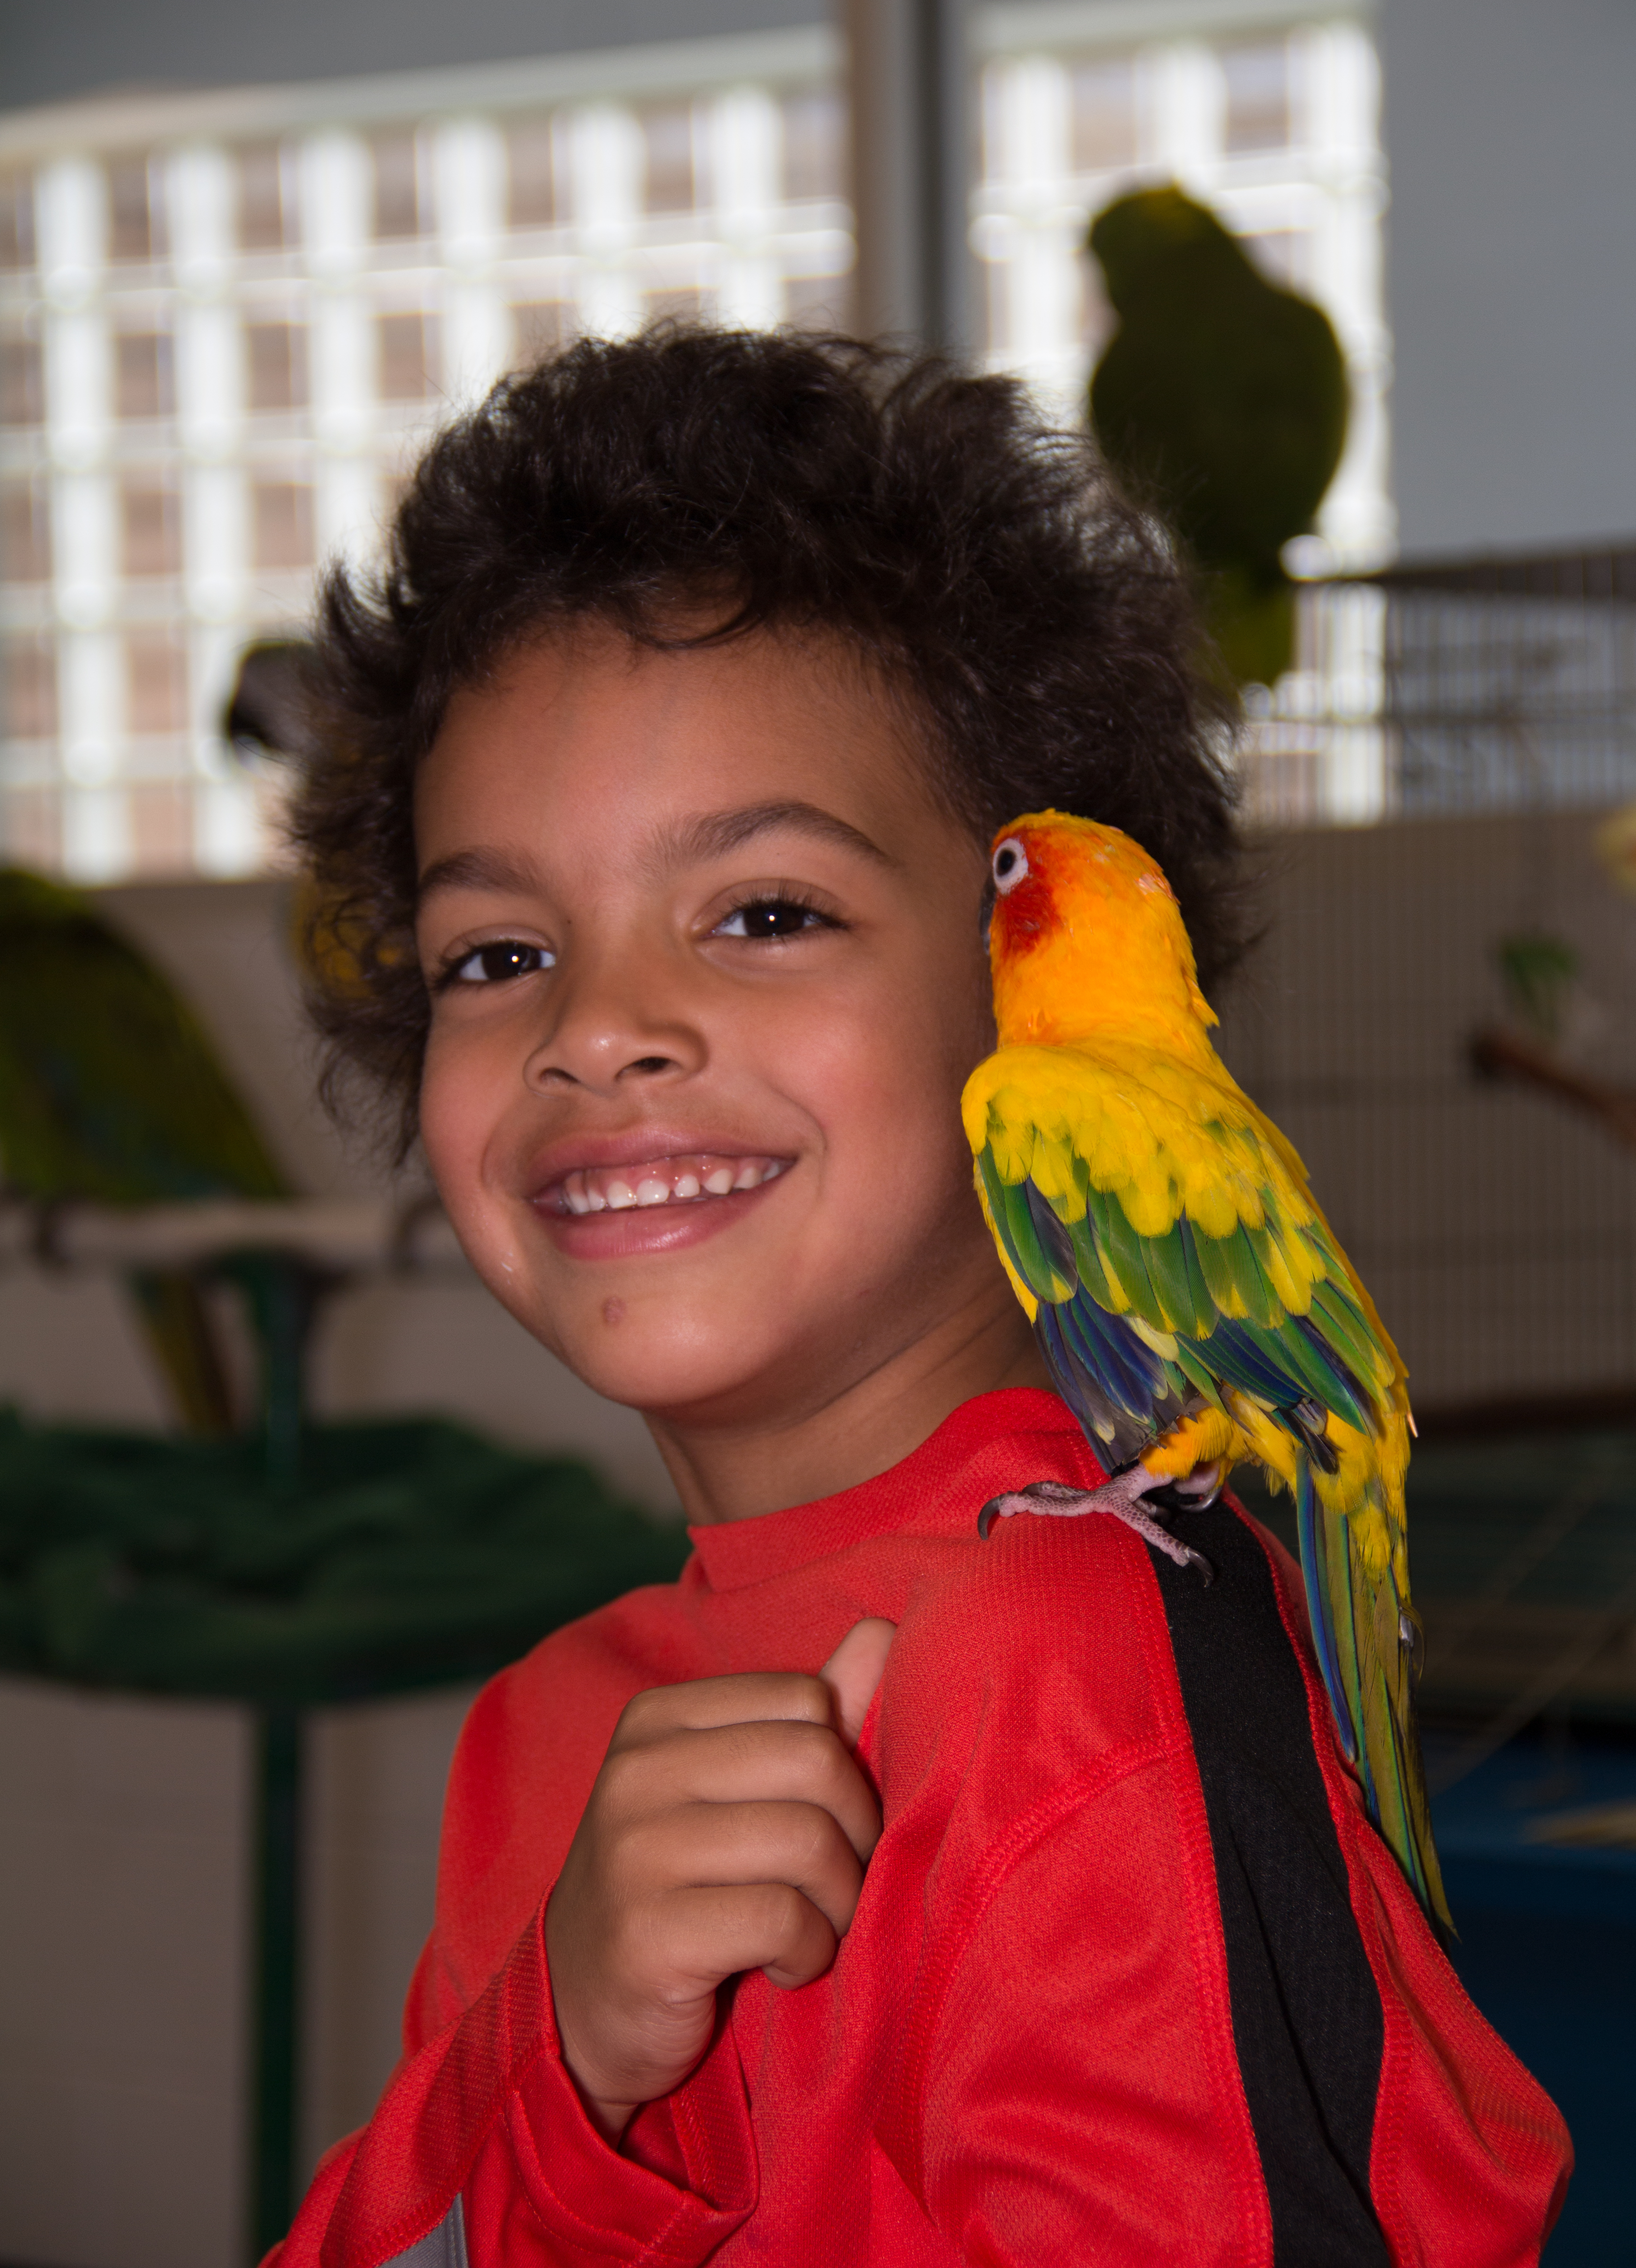 Parrot perched on child's shoulder